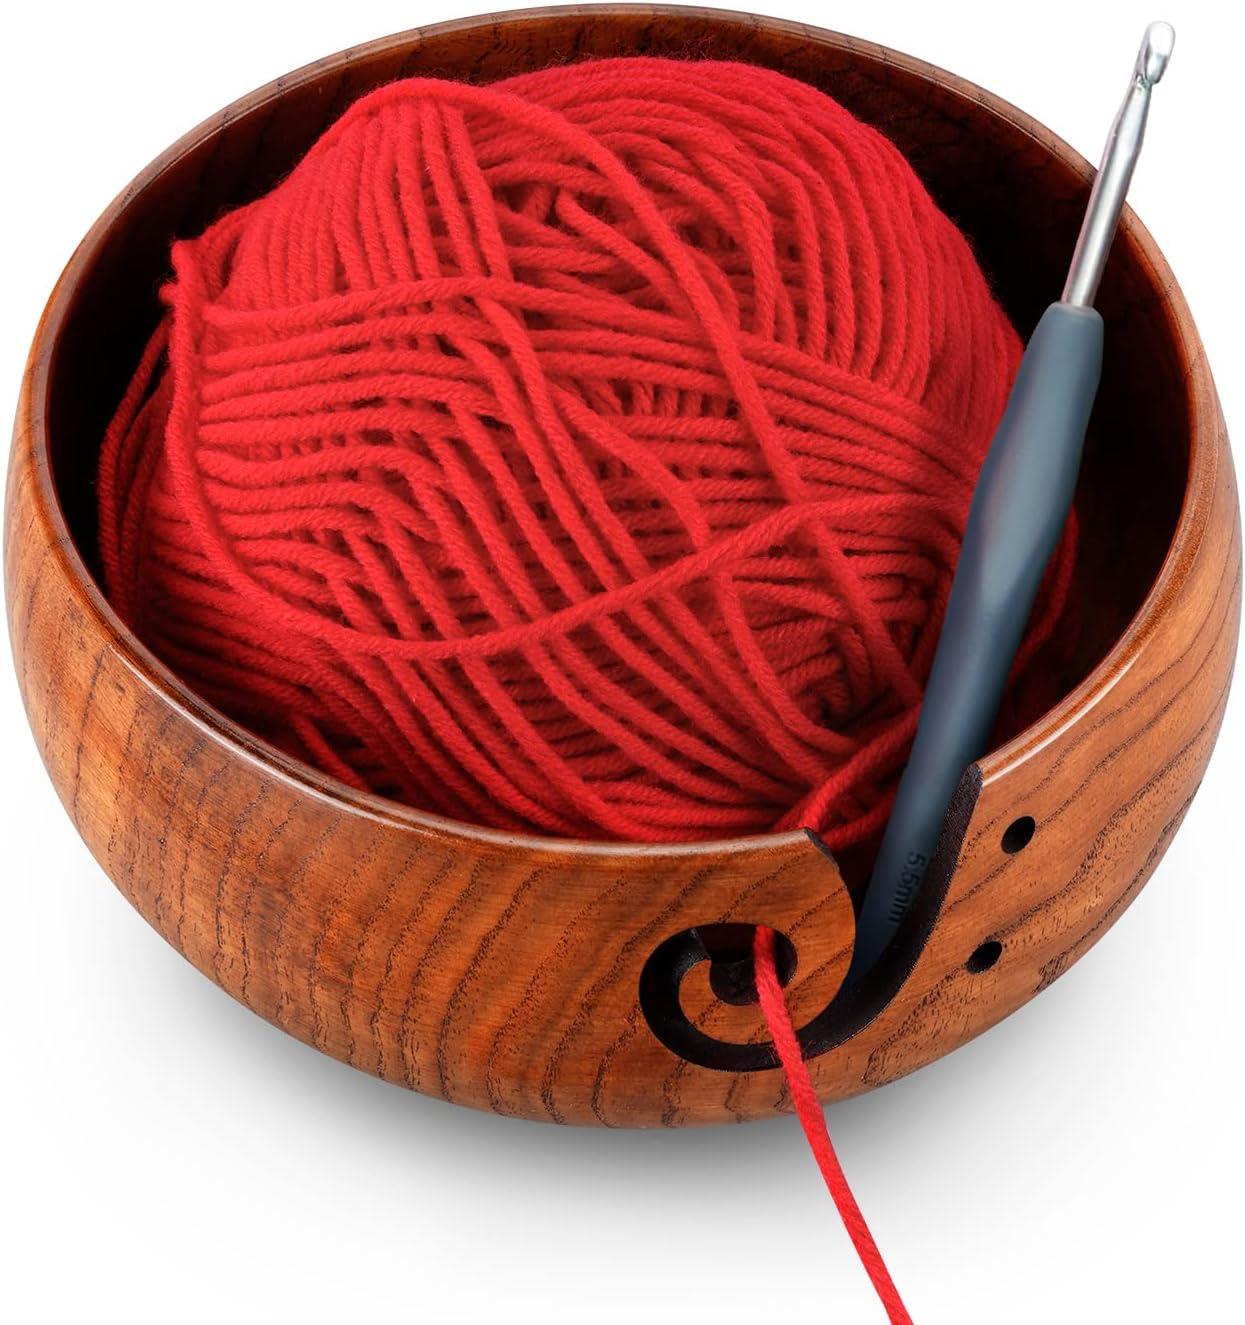  Wooden Yarn Bowl Knitting Bowl Large Yarn Holder Dispenser  Handmade Yarn Storage Bowl for DIY Knitting Crocheting Accessories Wool  Holder